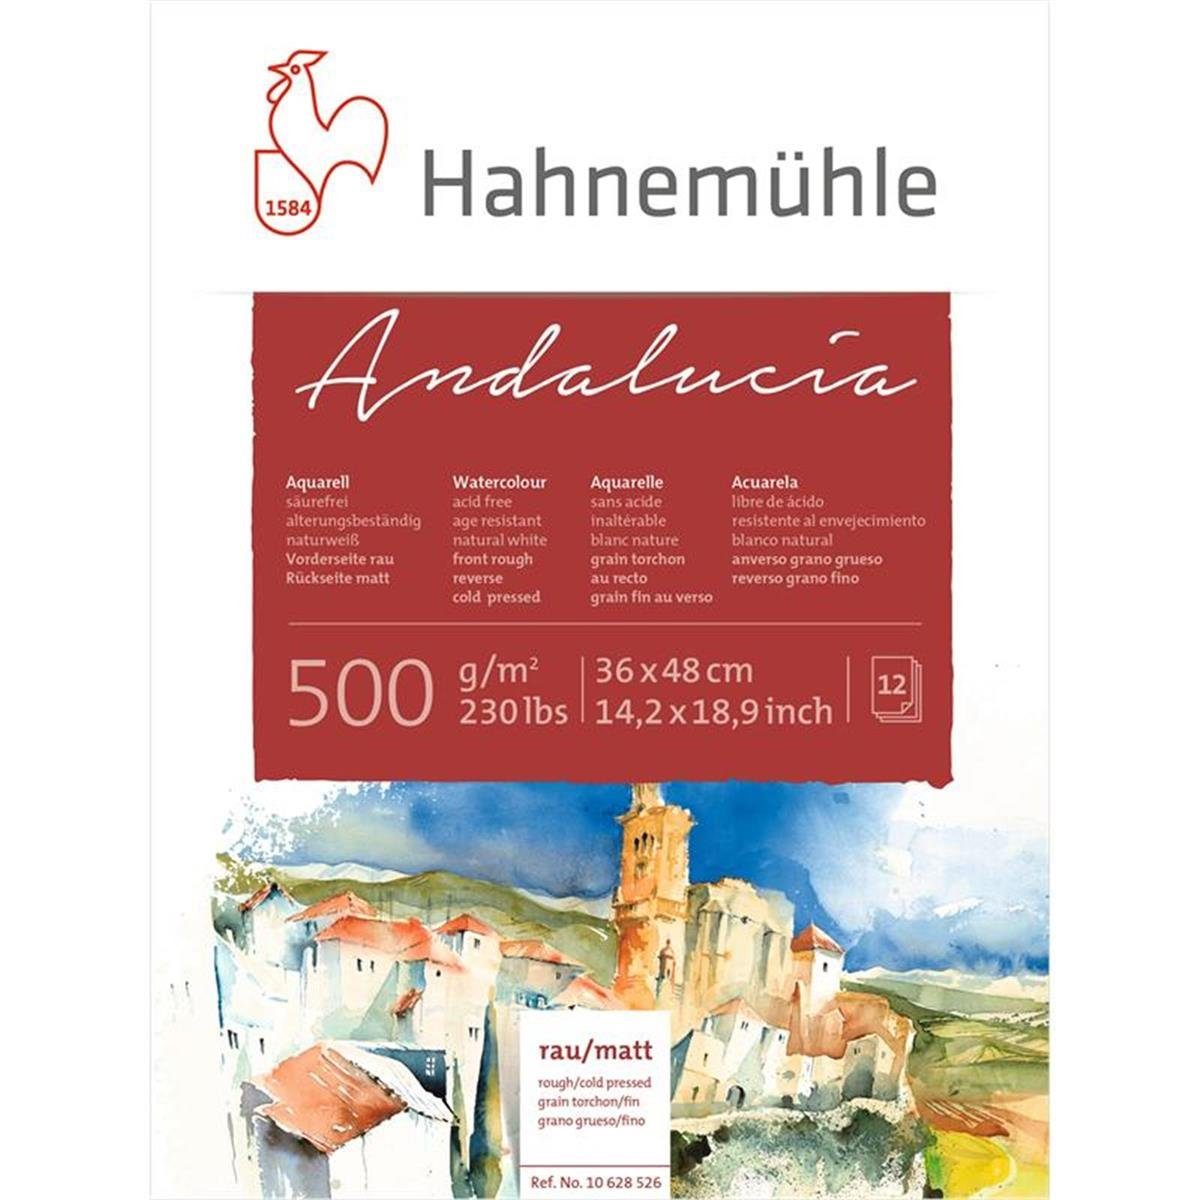 Hahnemühle Aquarellpapier Andalucía Aquarellkarton - rau/matt - 500 g/m² - 36 x 48 cm - 12 Blatt